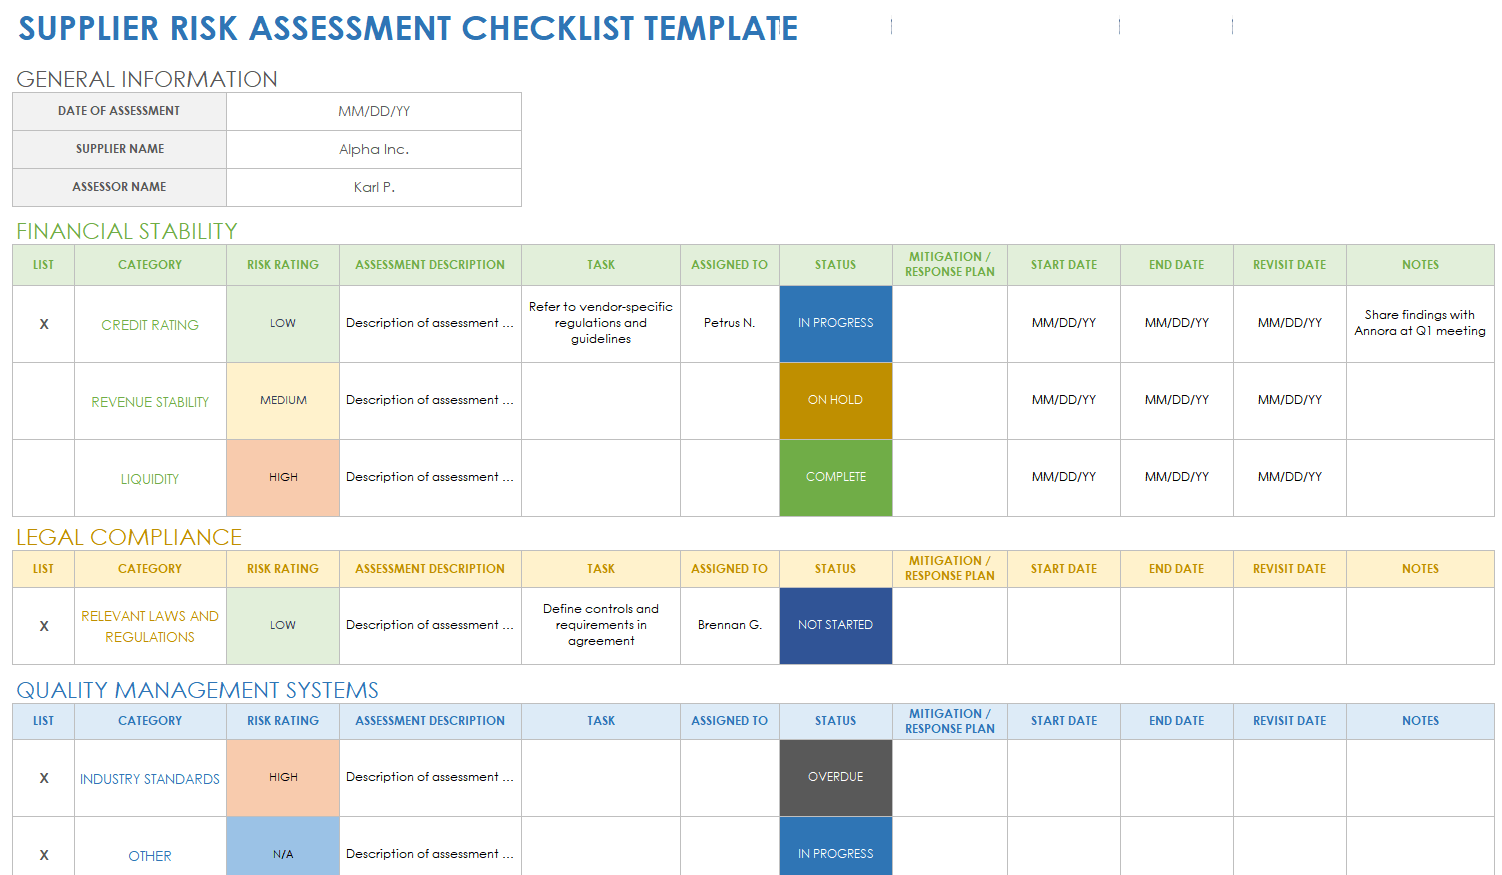 Supplier Risk Assessment Checklist Template